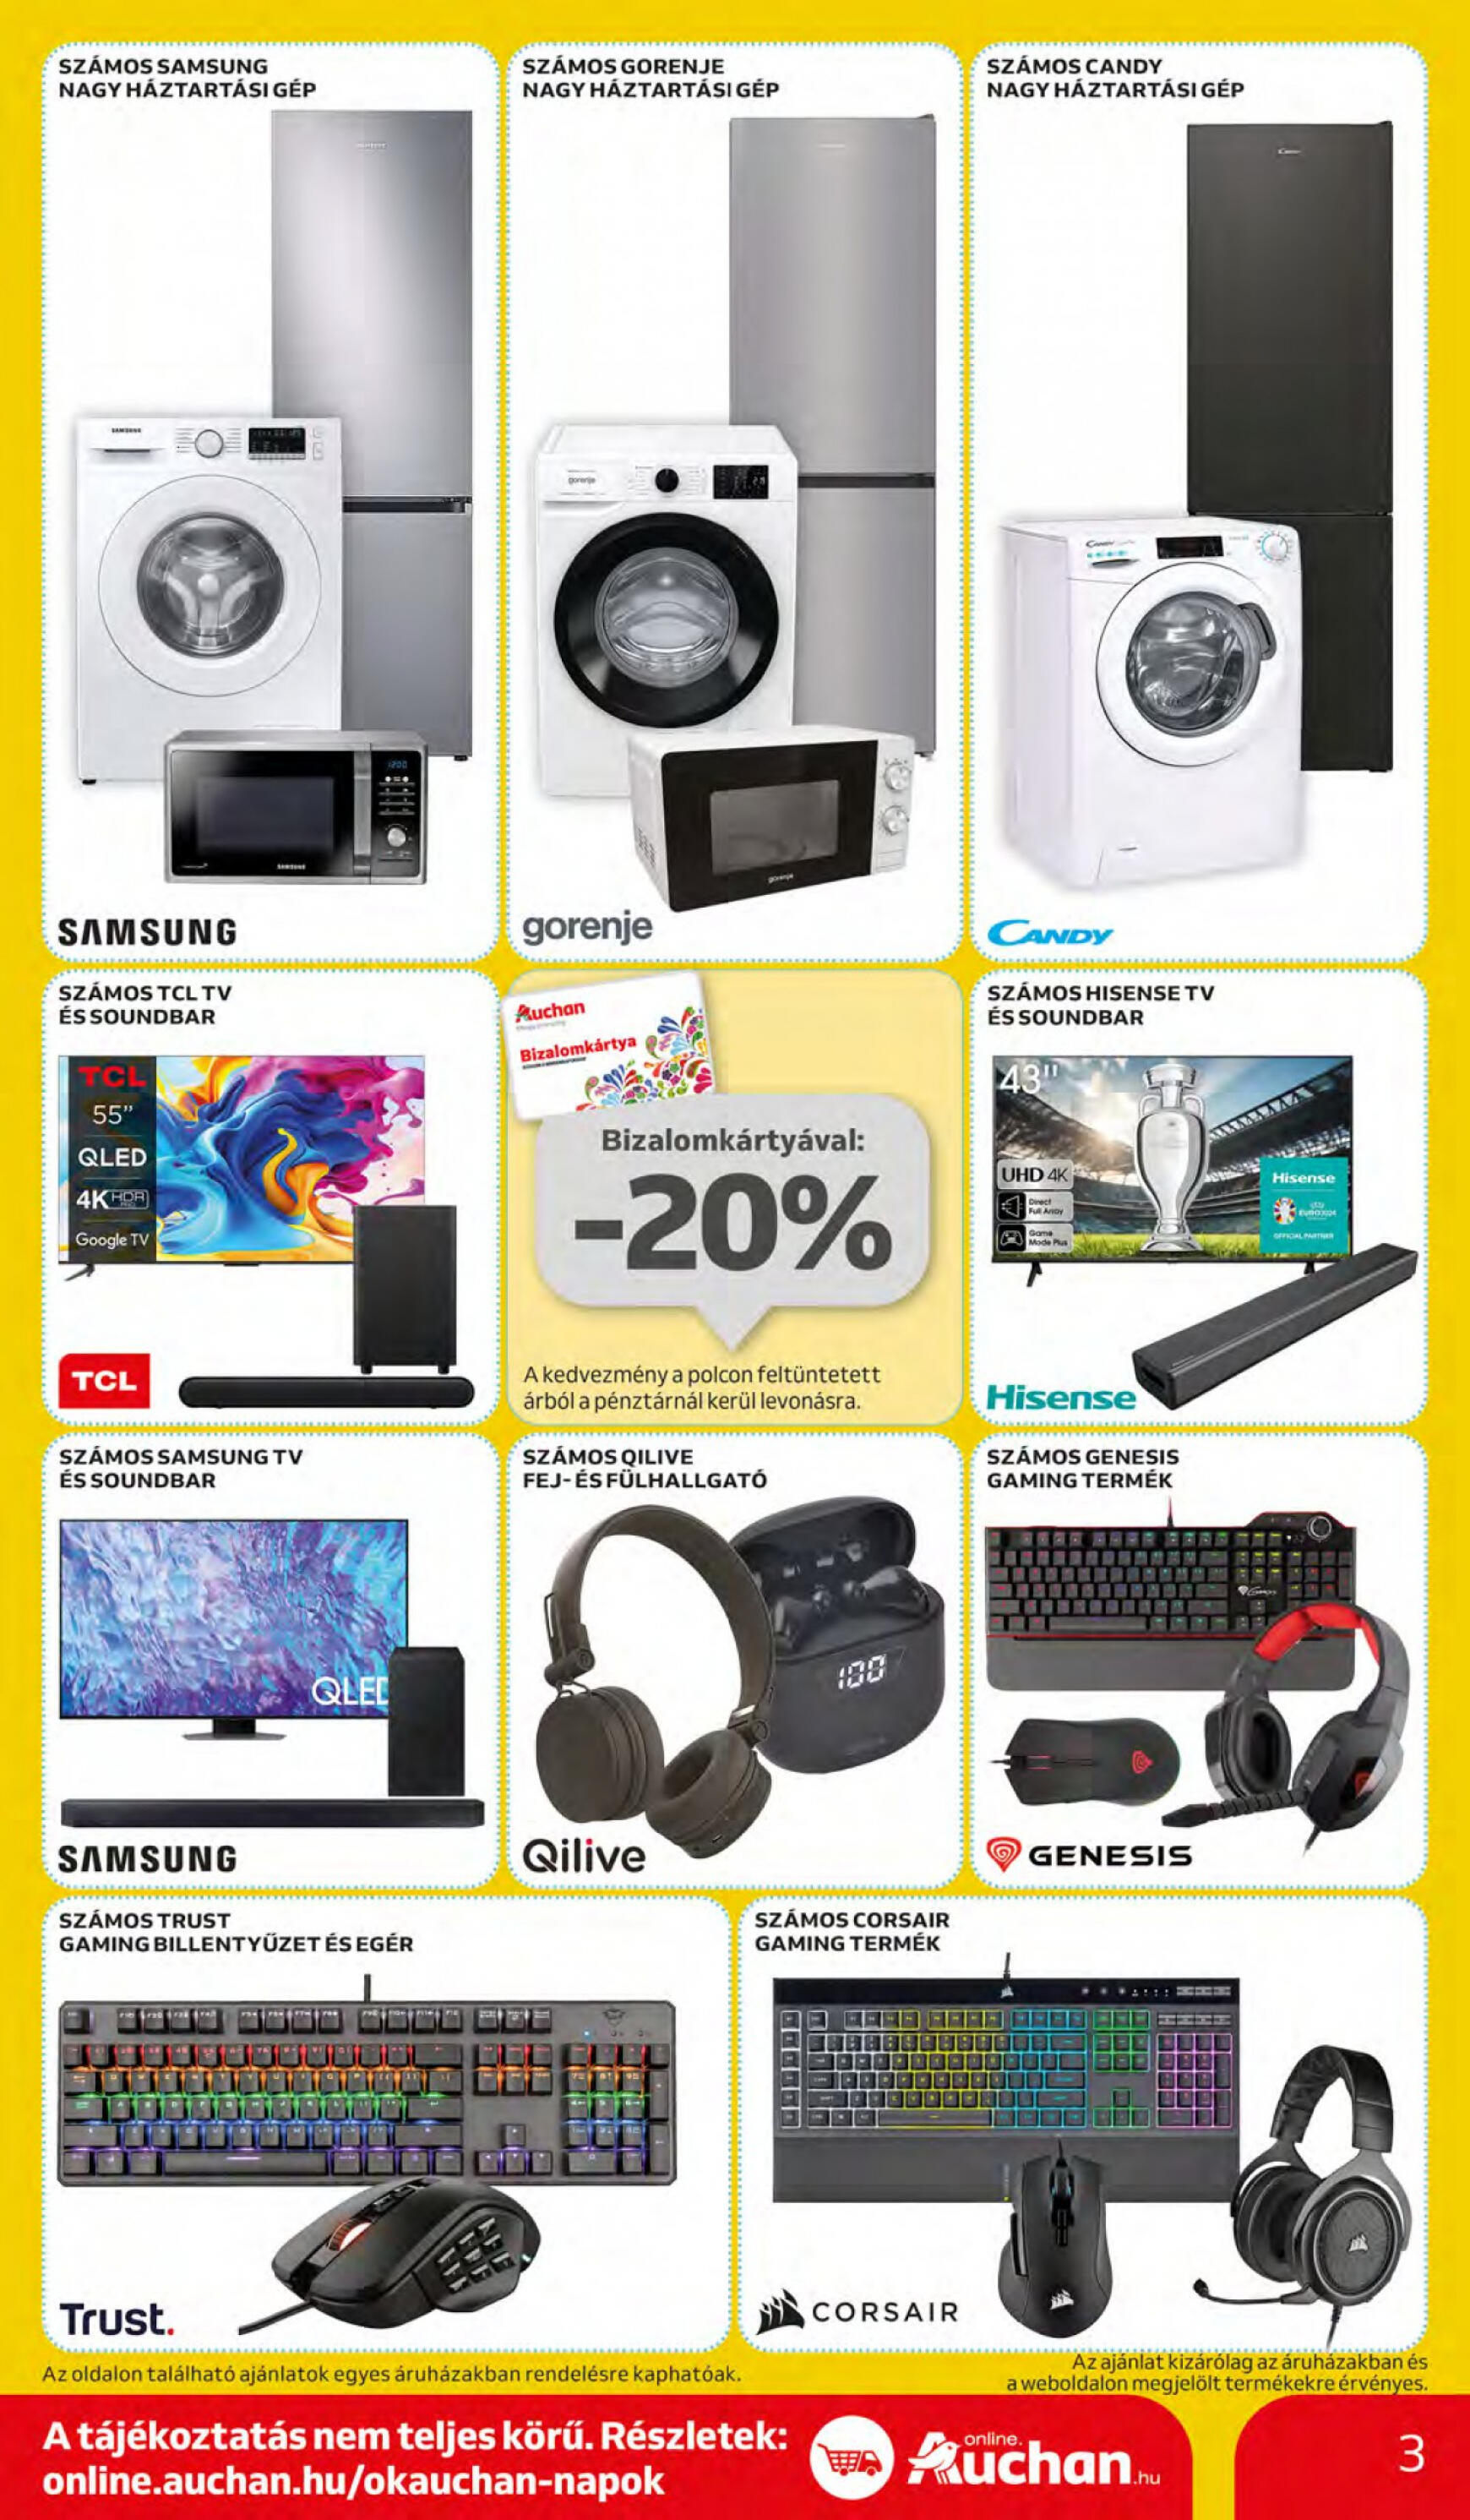 auchan - Aktuális újság Auchan 04.11. - 04.17. - page: 3